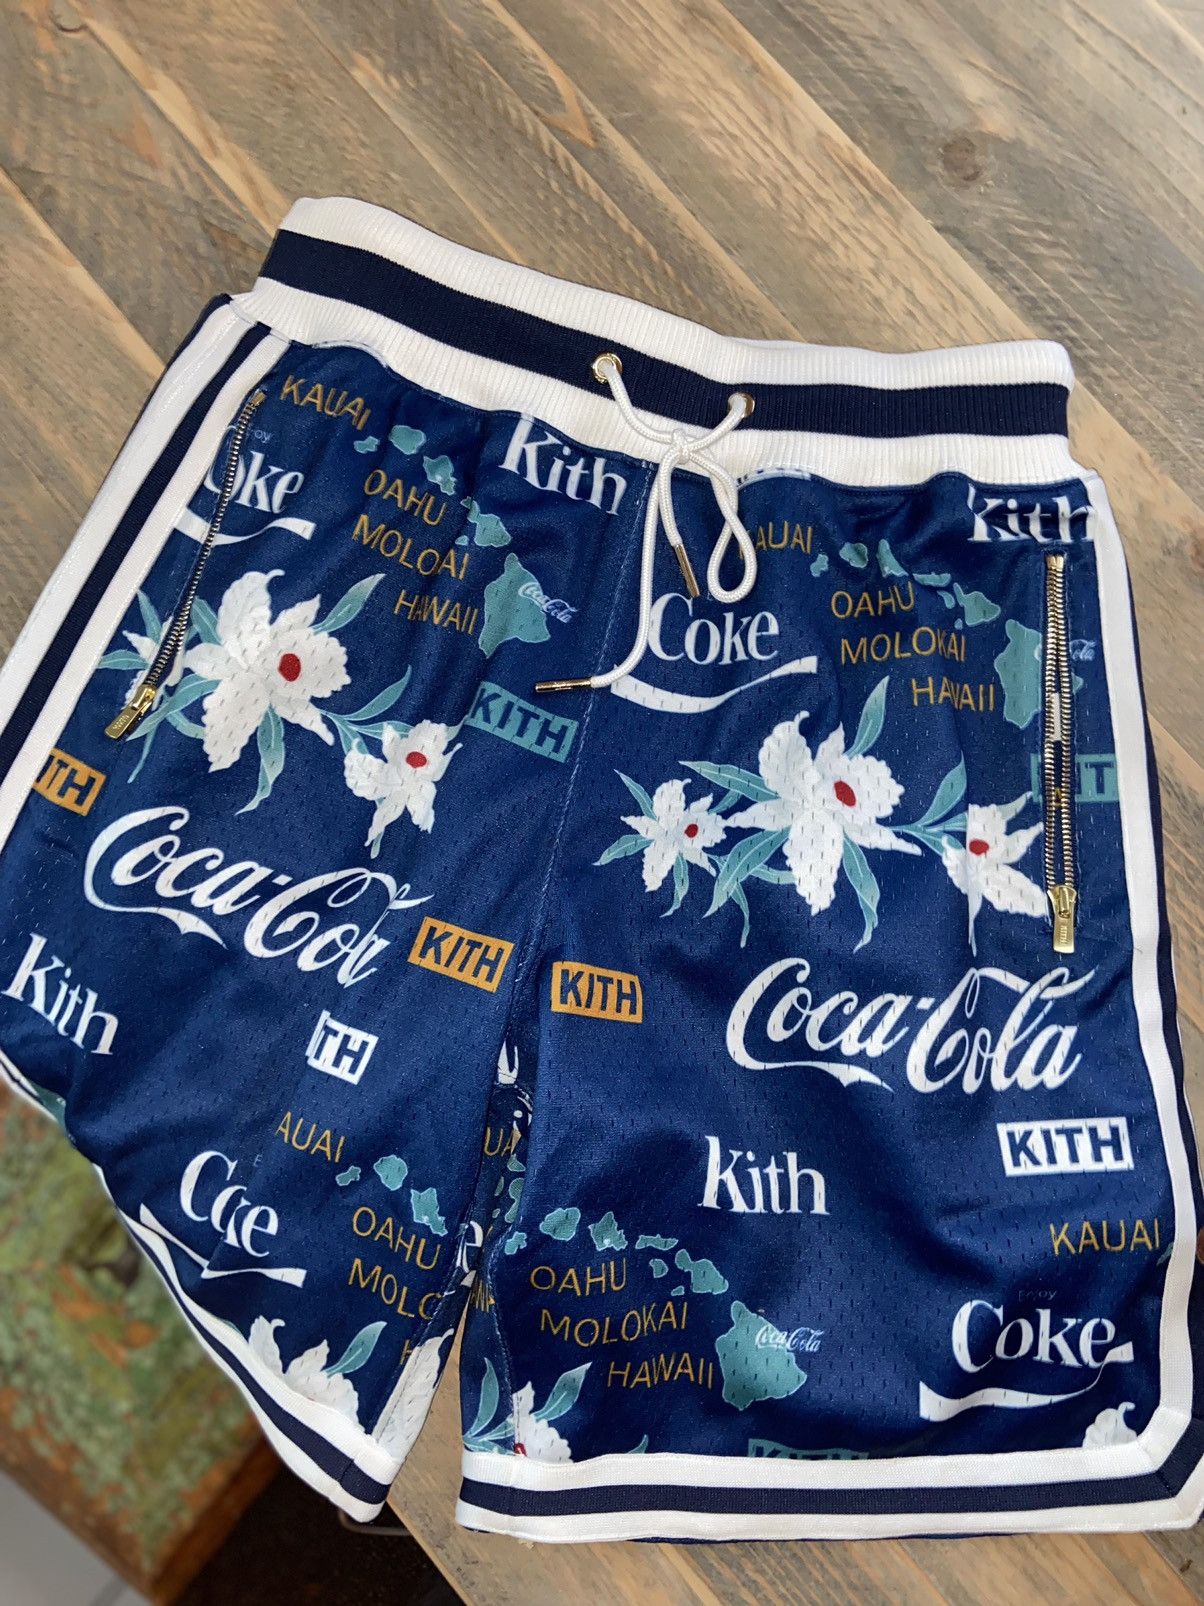 Kith Coca Cola Shorts | Grailed